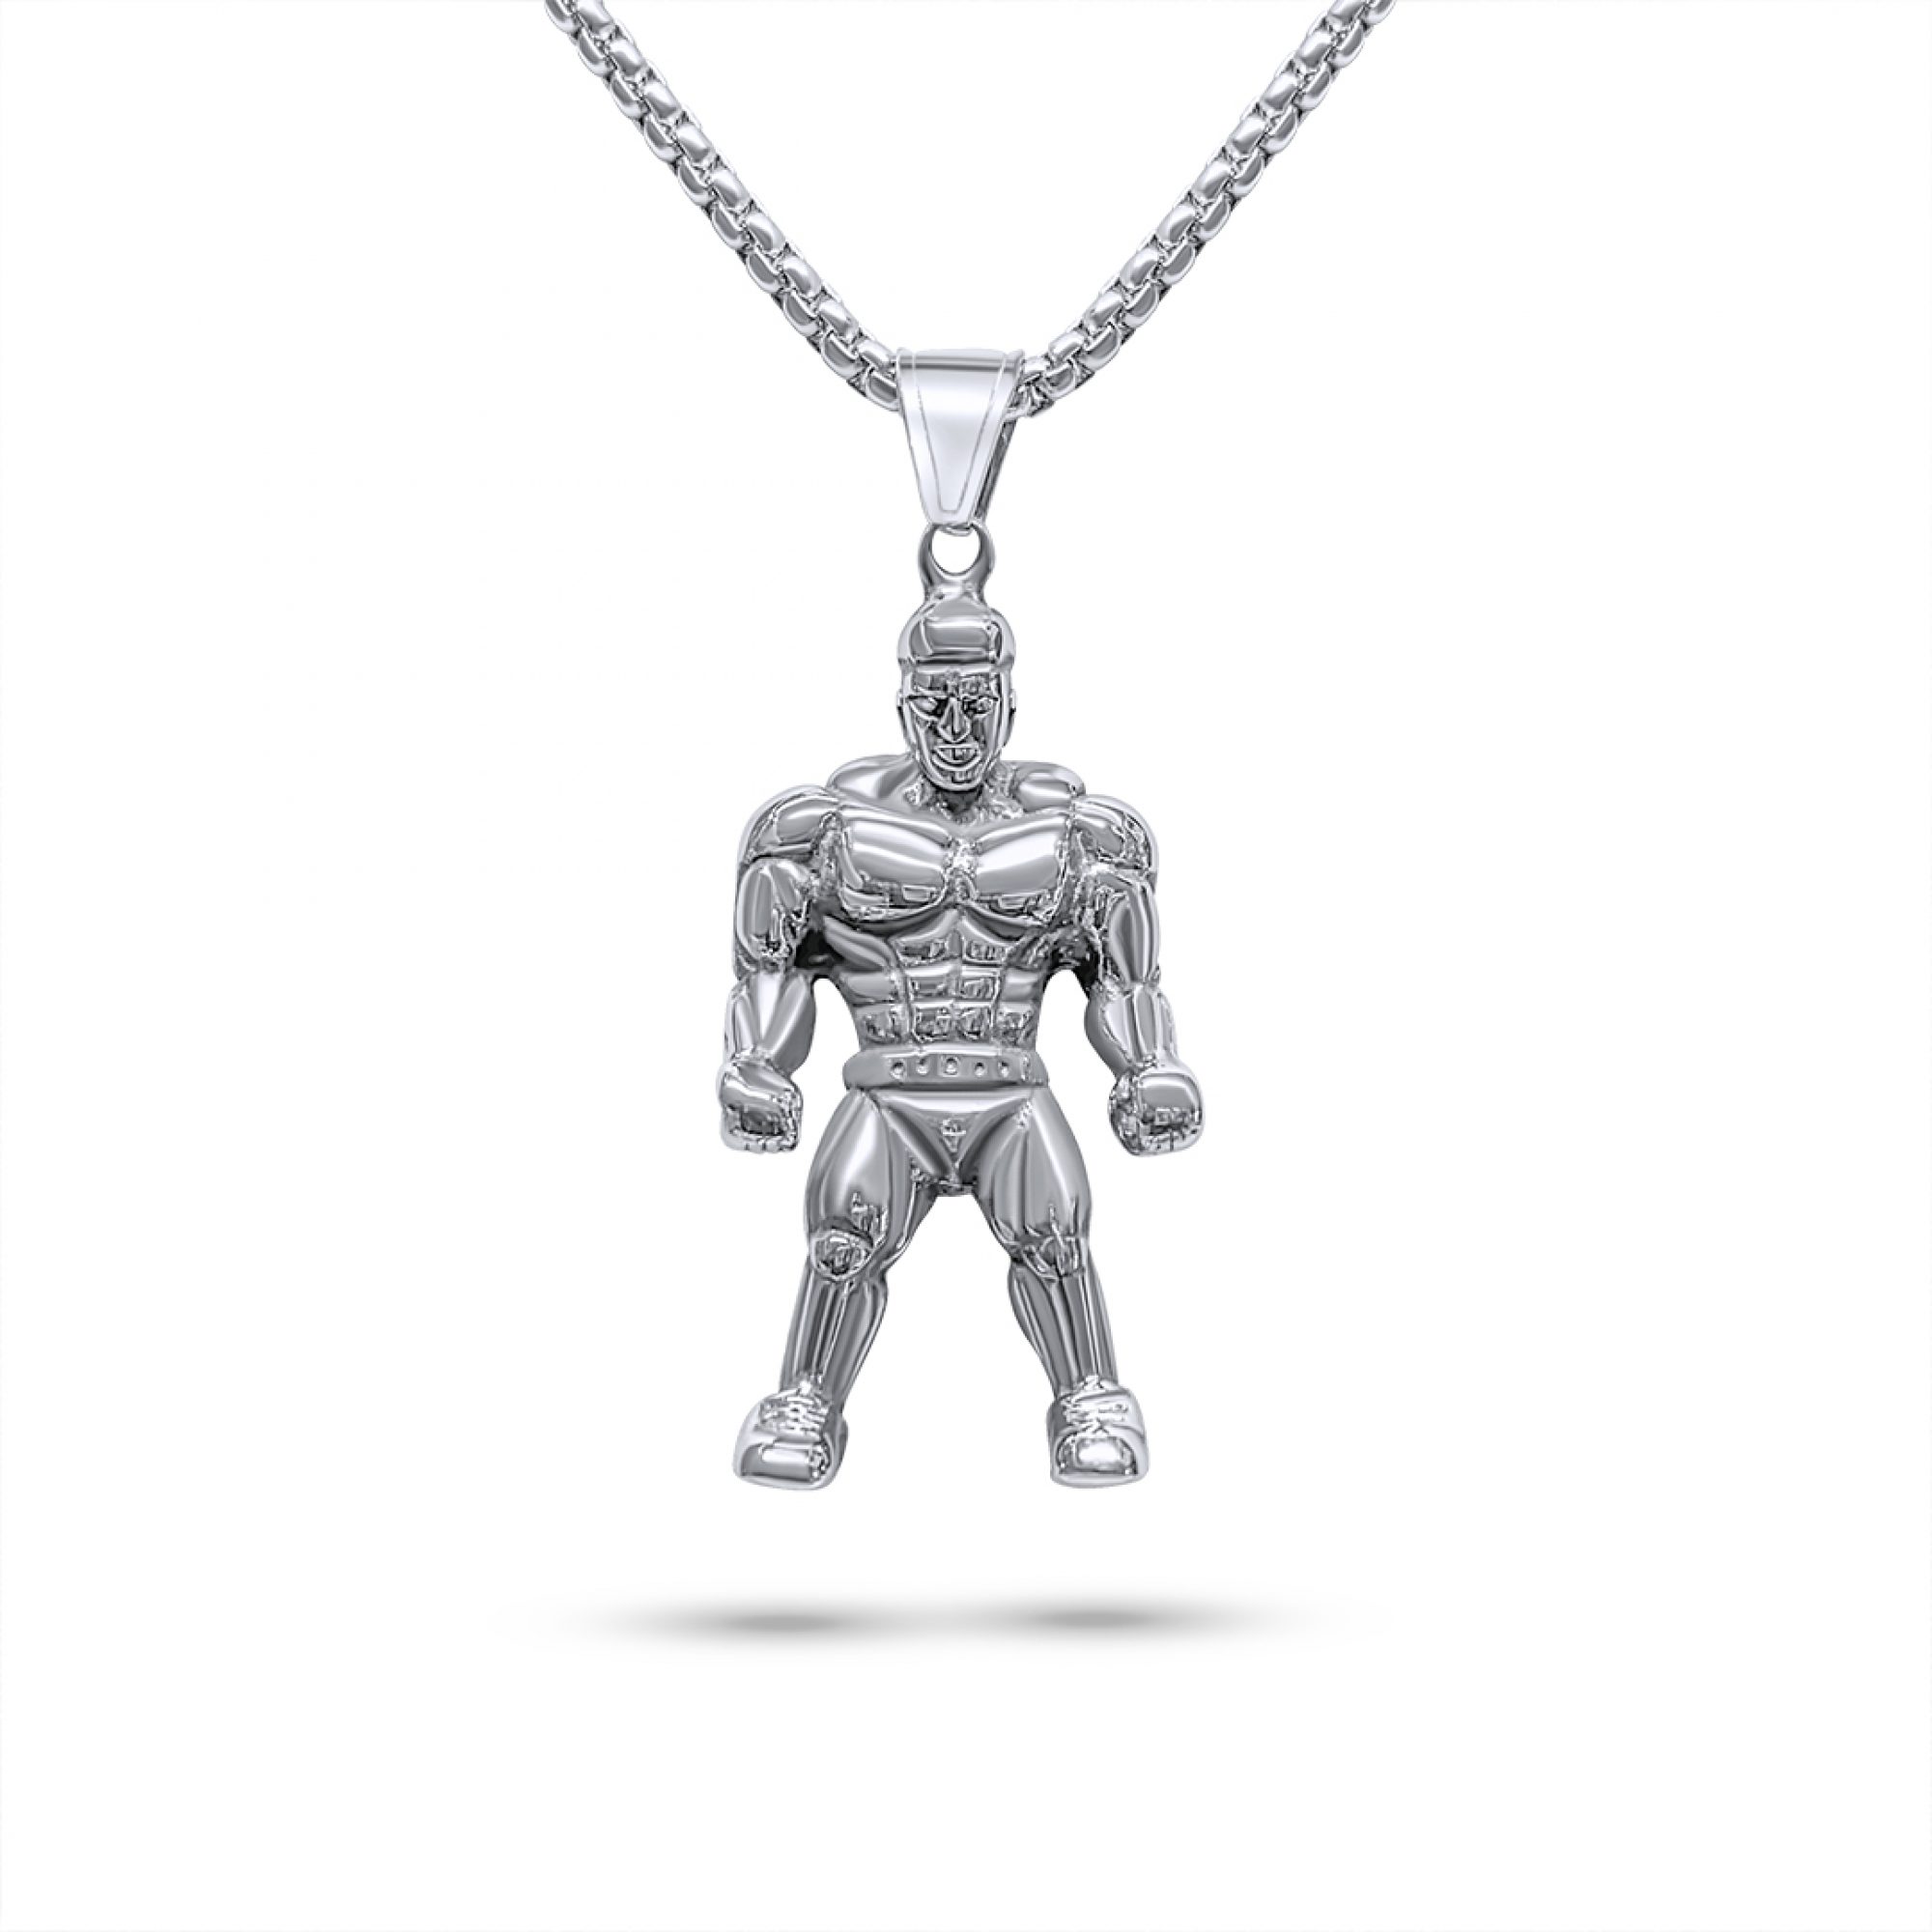 Steel bodybuilder necklace